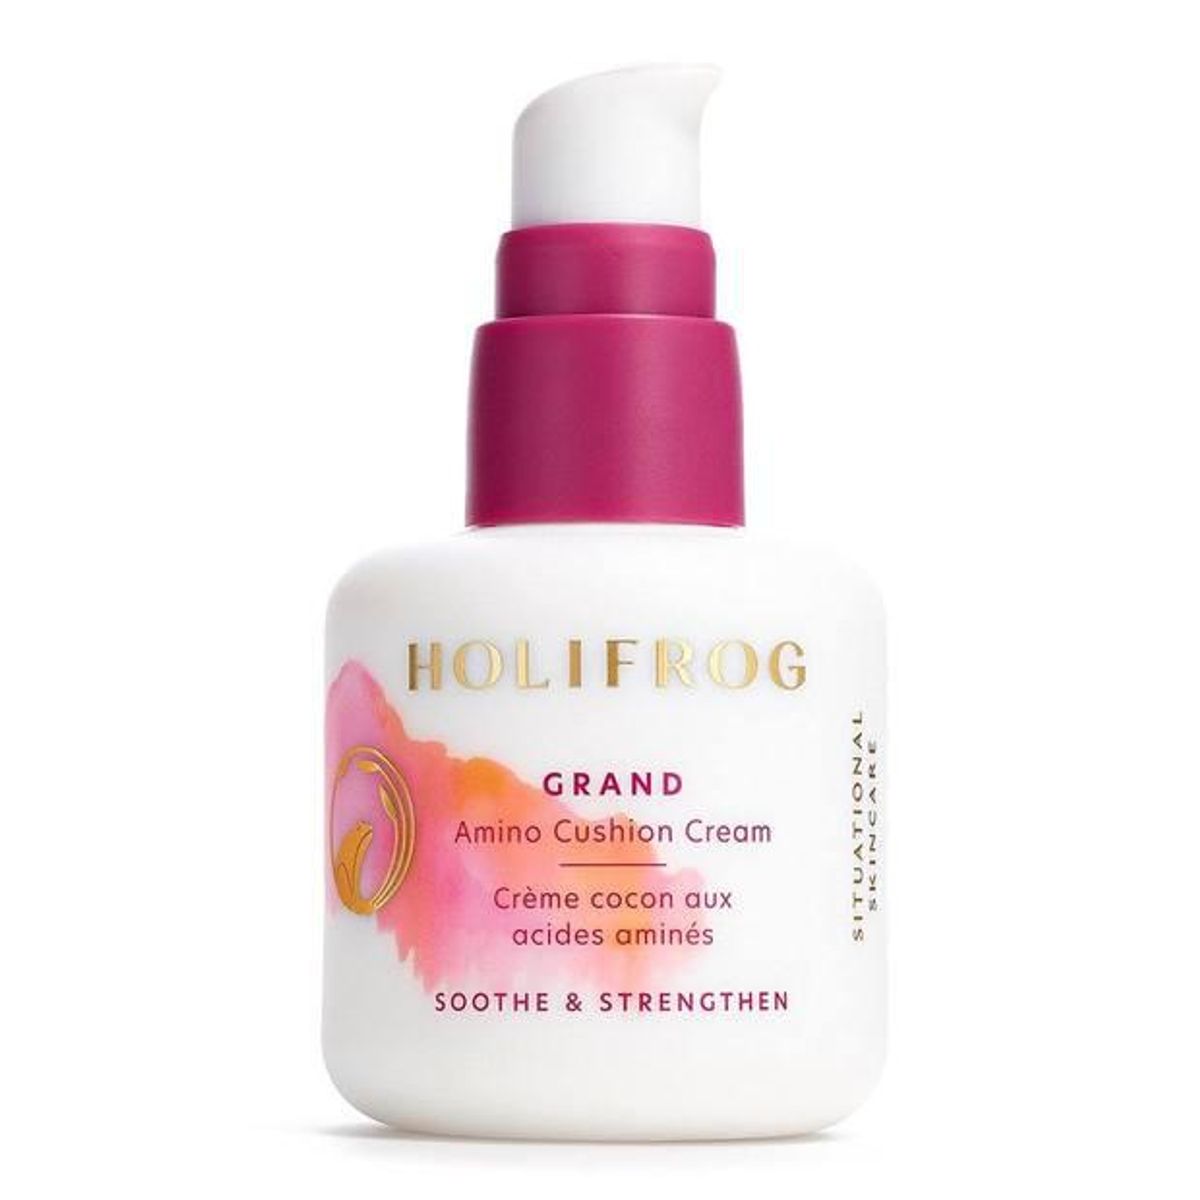 holifrog grand amino cushion cream